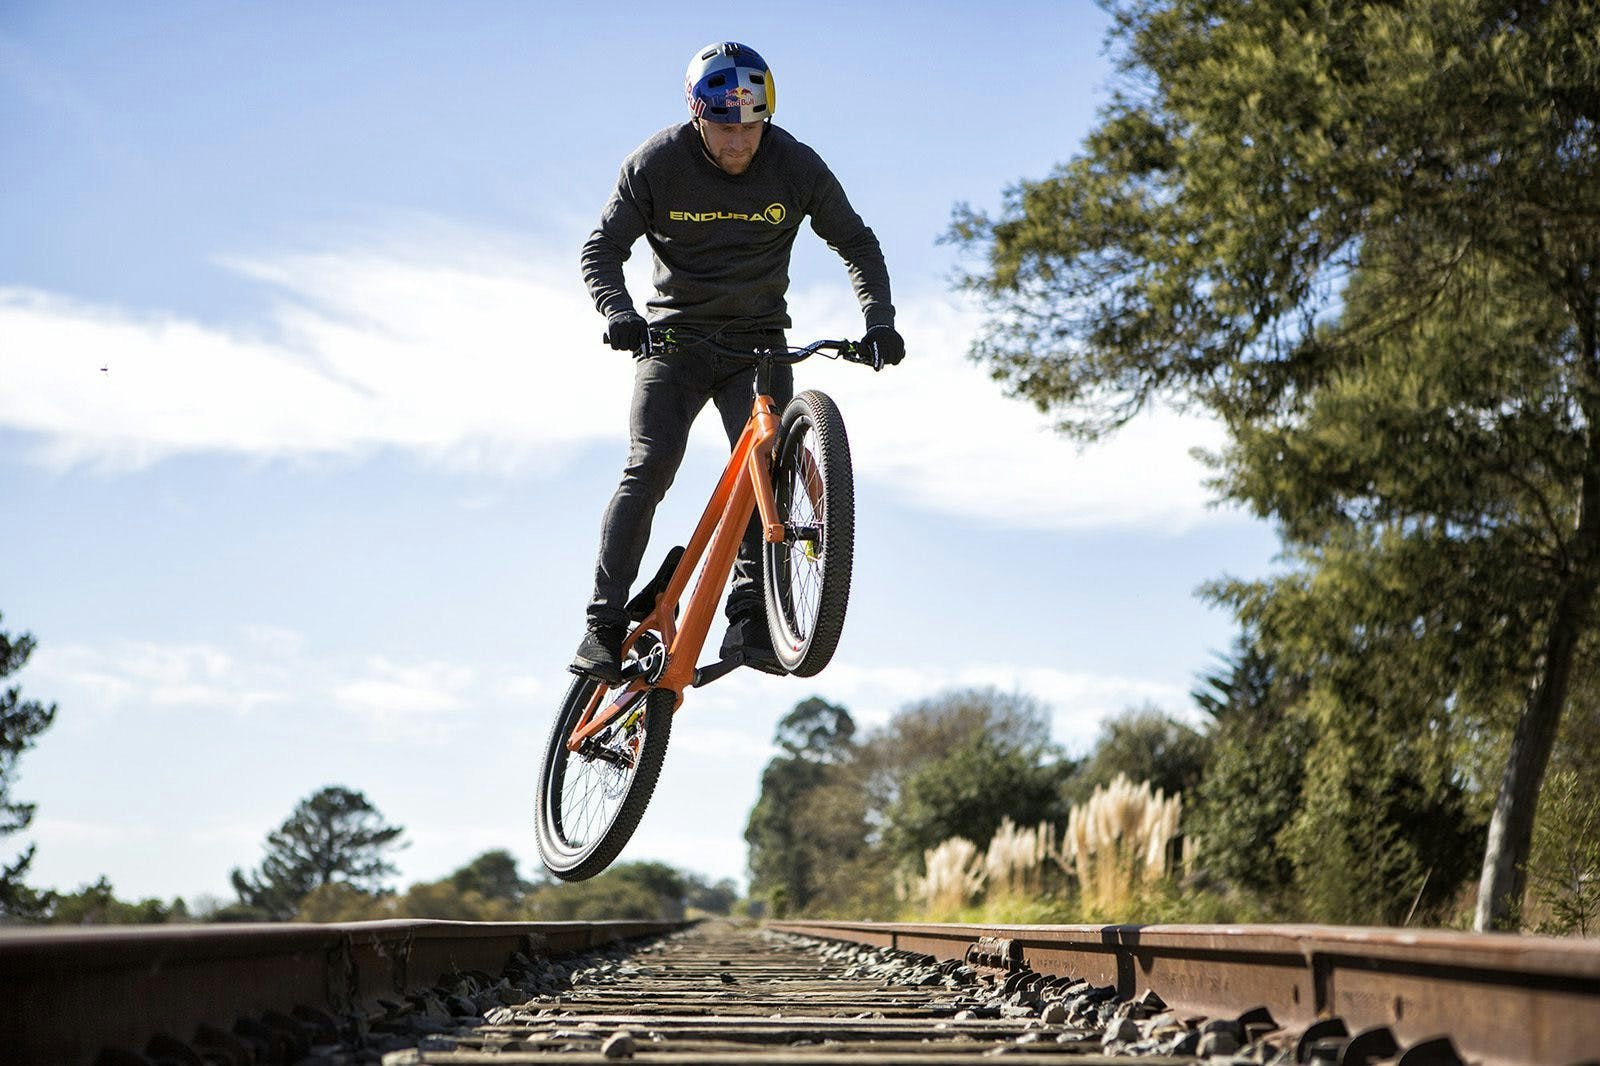 Danny Macaskill riding his Santa Cruz trials bike on train tracks in Santa Cruz California